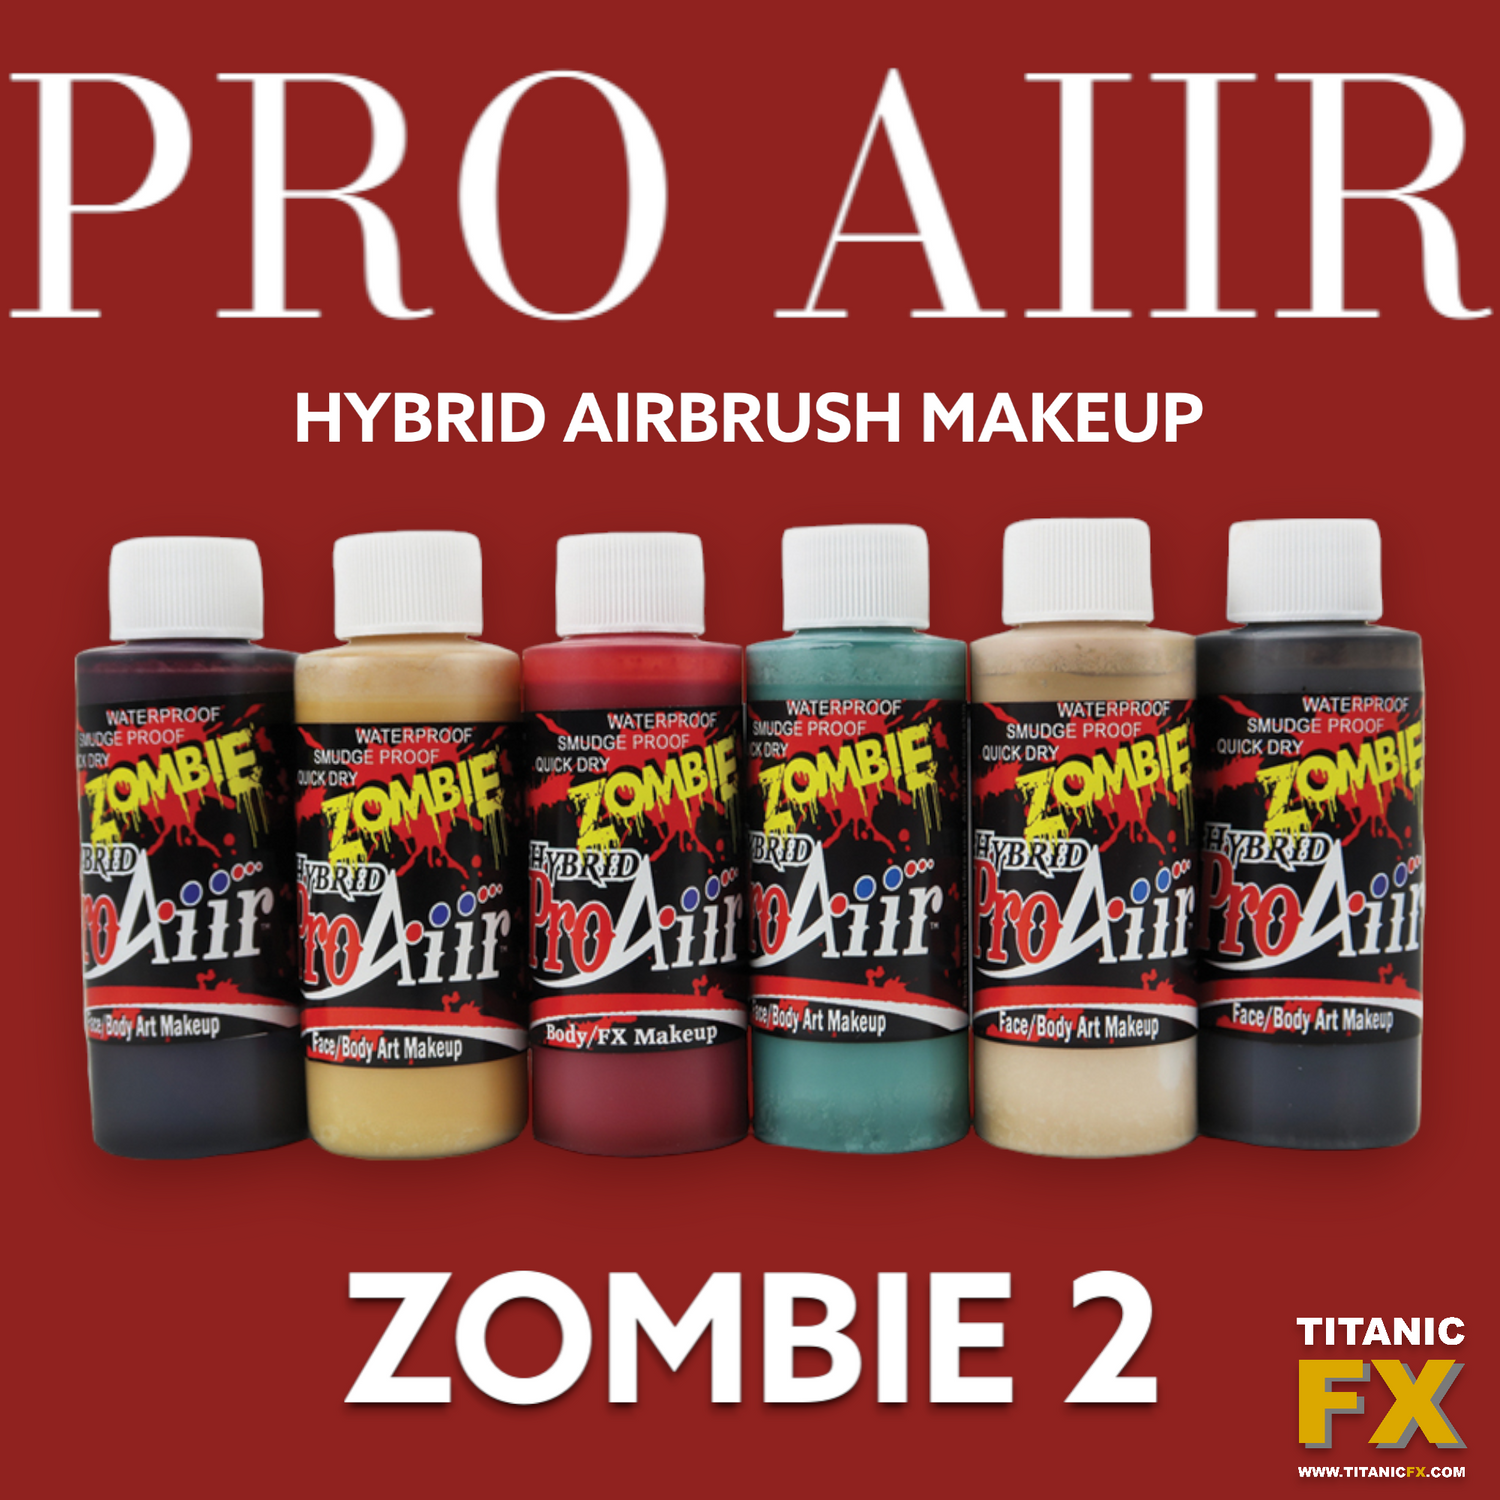 Pro Aiir Hybrid Airbrush Makeup Kit - 'Zombie 2'